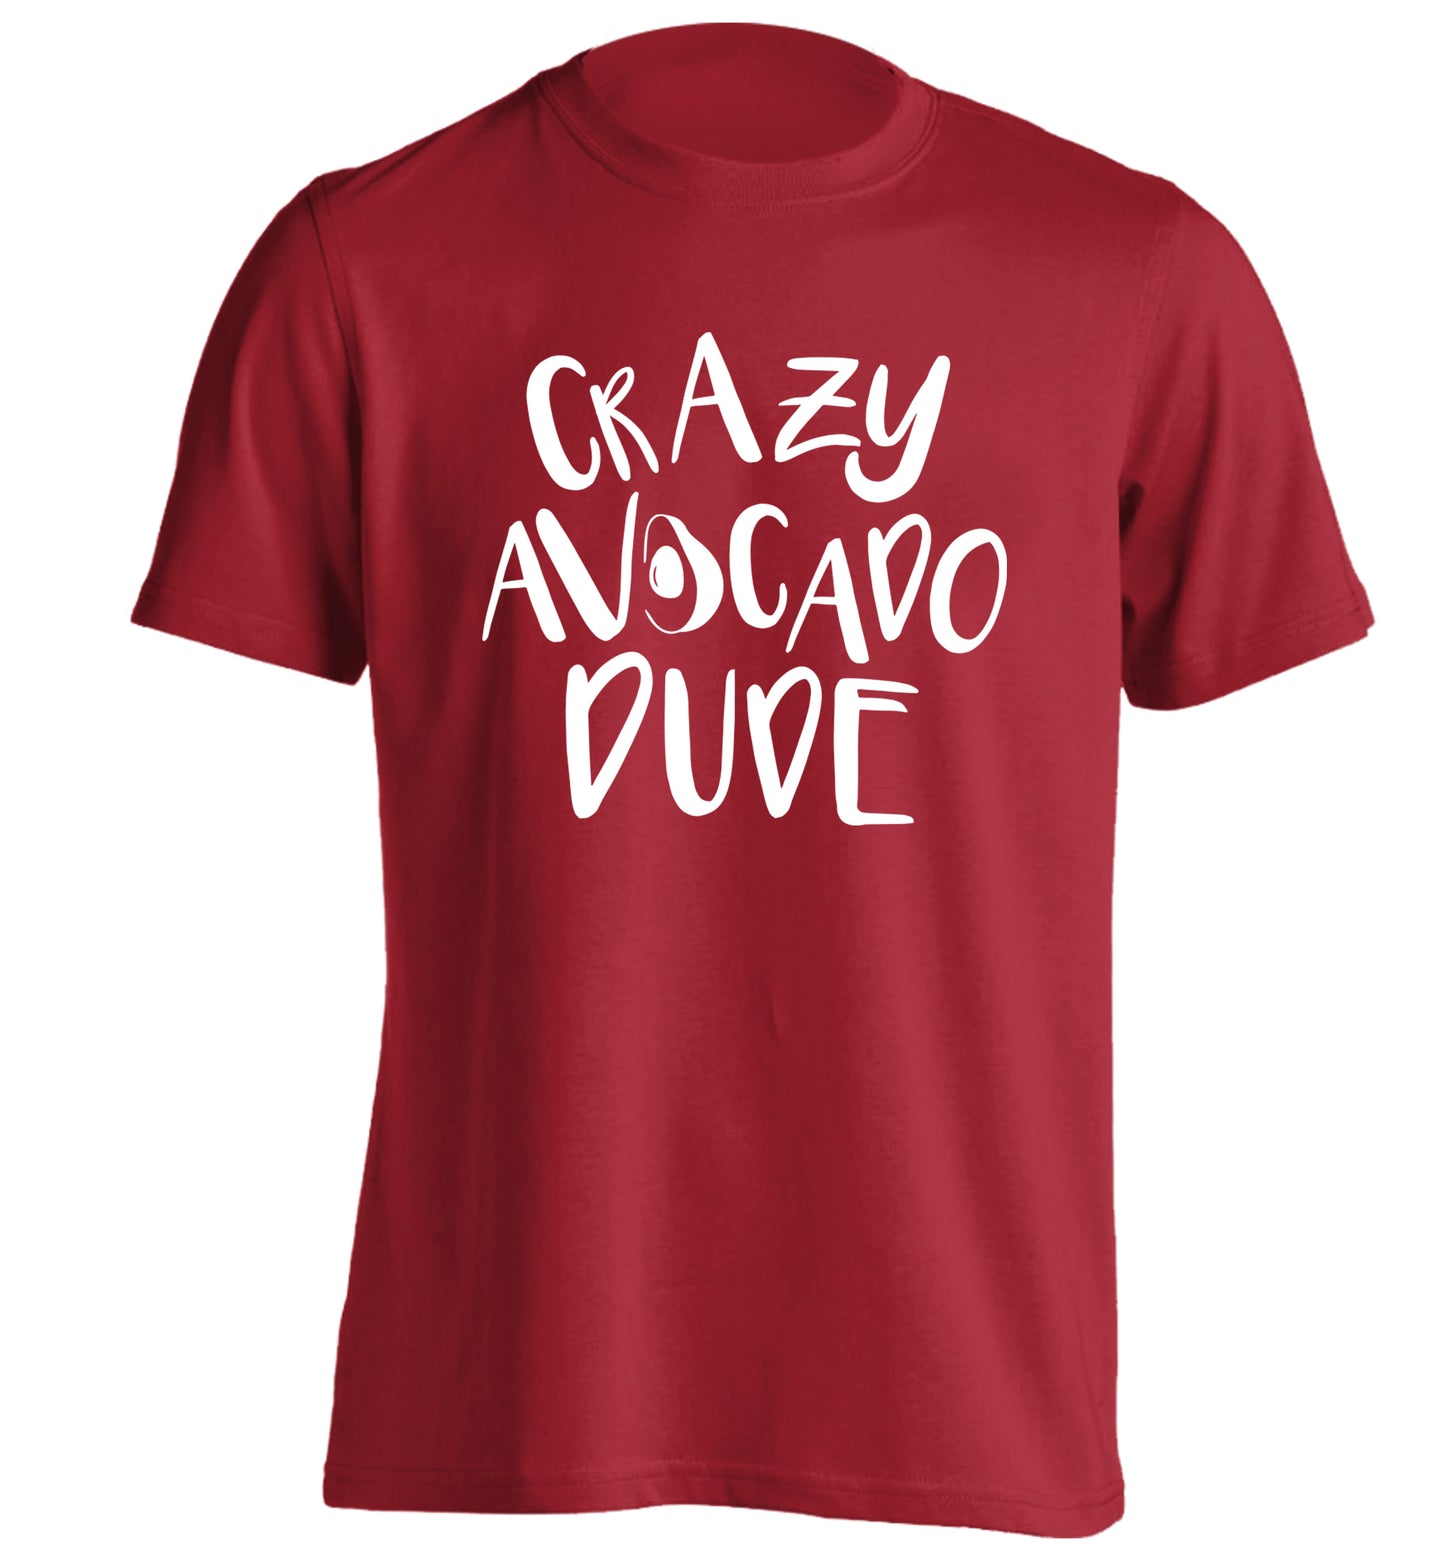 Crazy avocado dude adults unisex red Tshirt 2XL